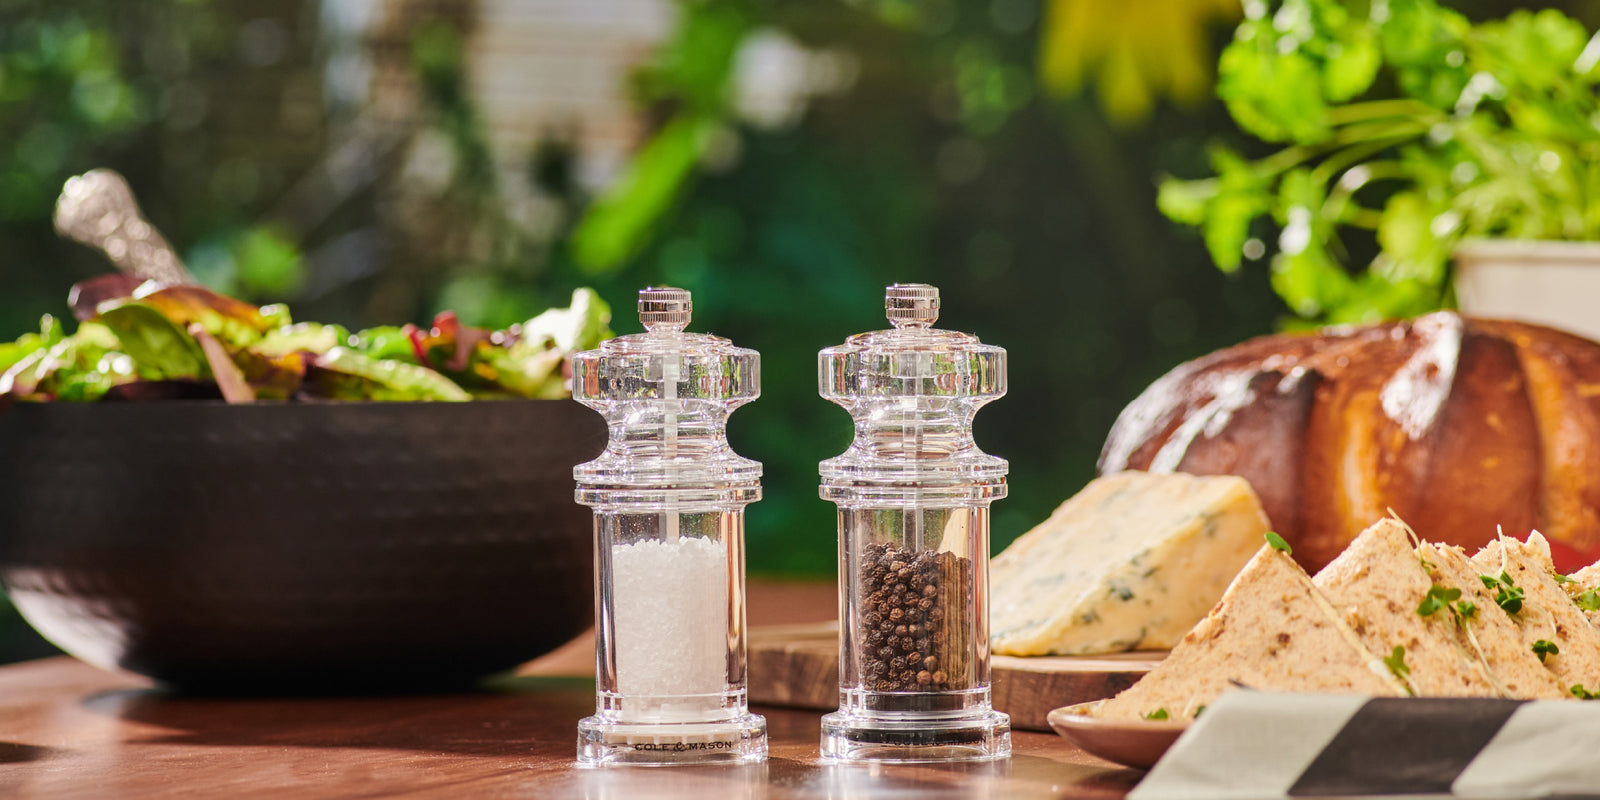 Salt Pepper Grinder Acrylic, Acrylic Seasoning Mechanism